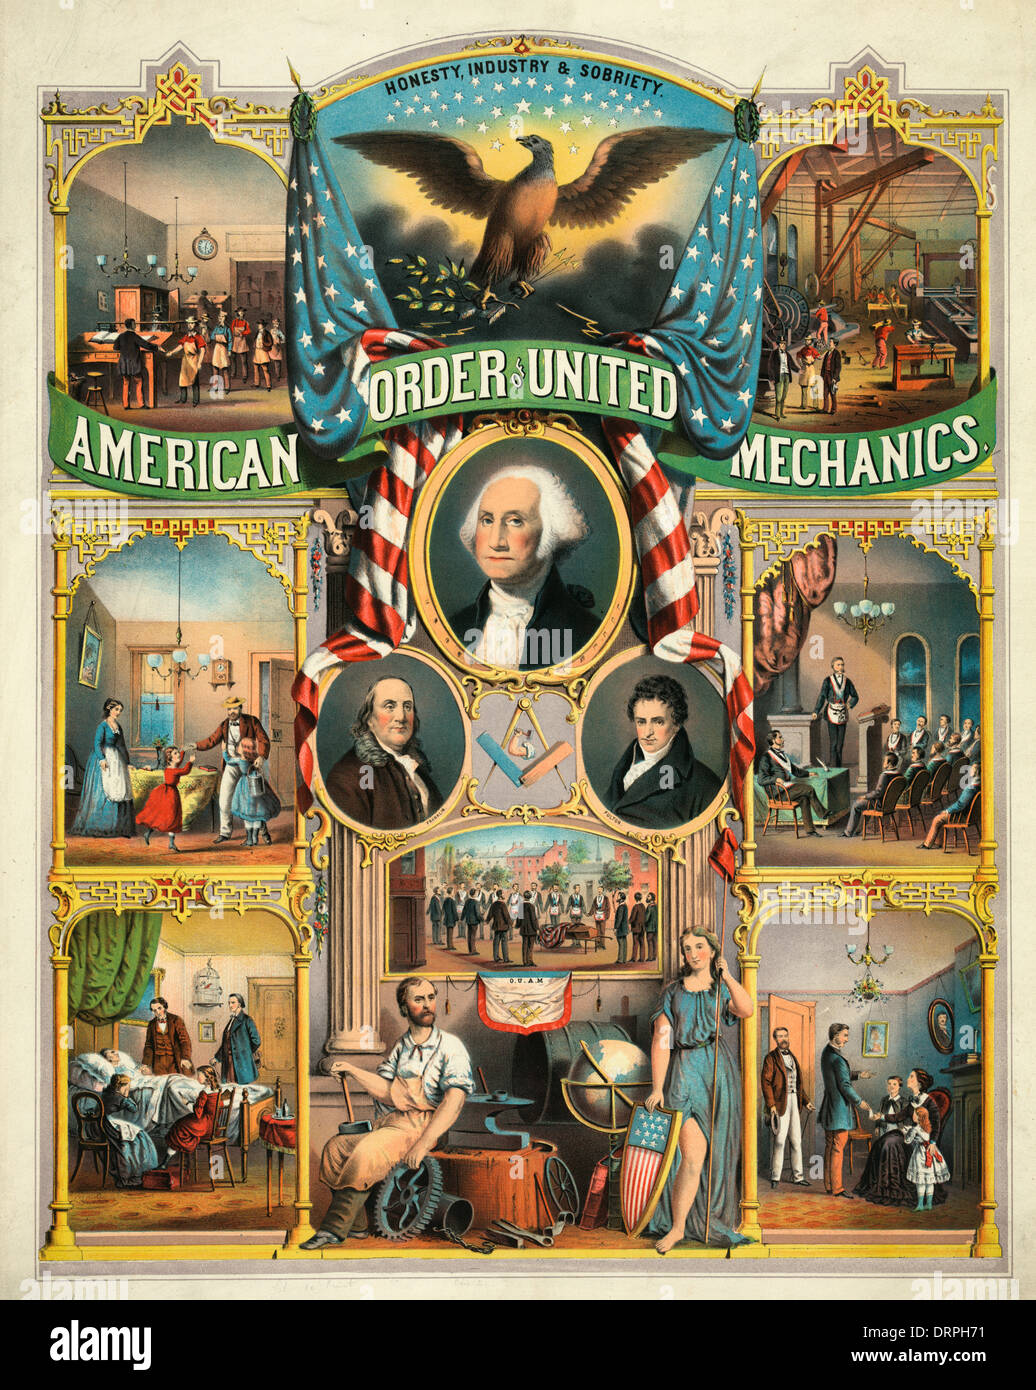 American Order of United Mechanics - vintage poster circa 1870 Stock Photo